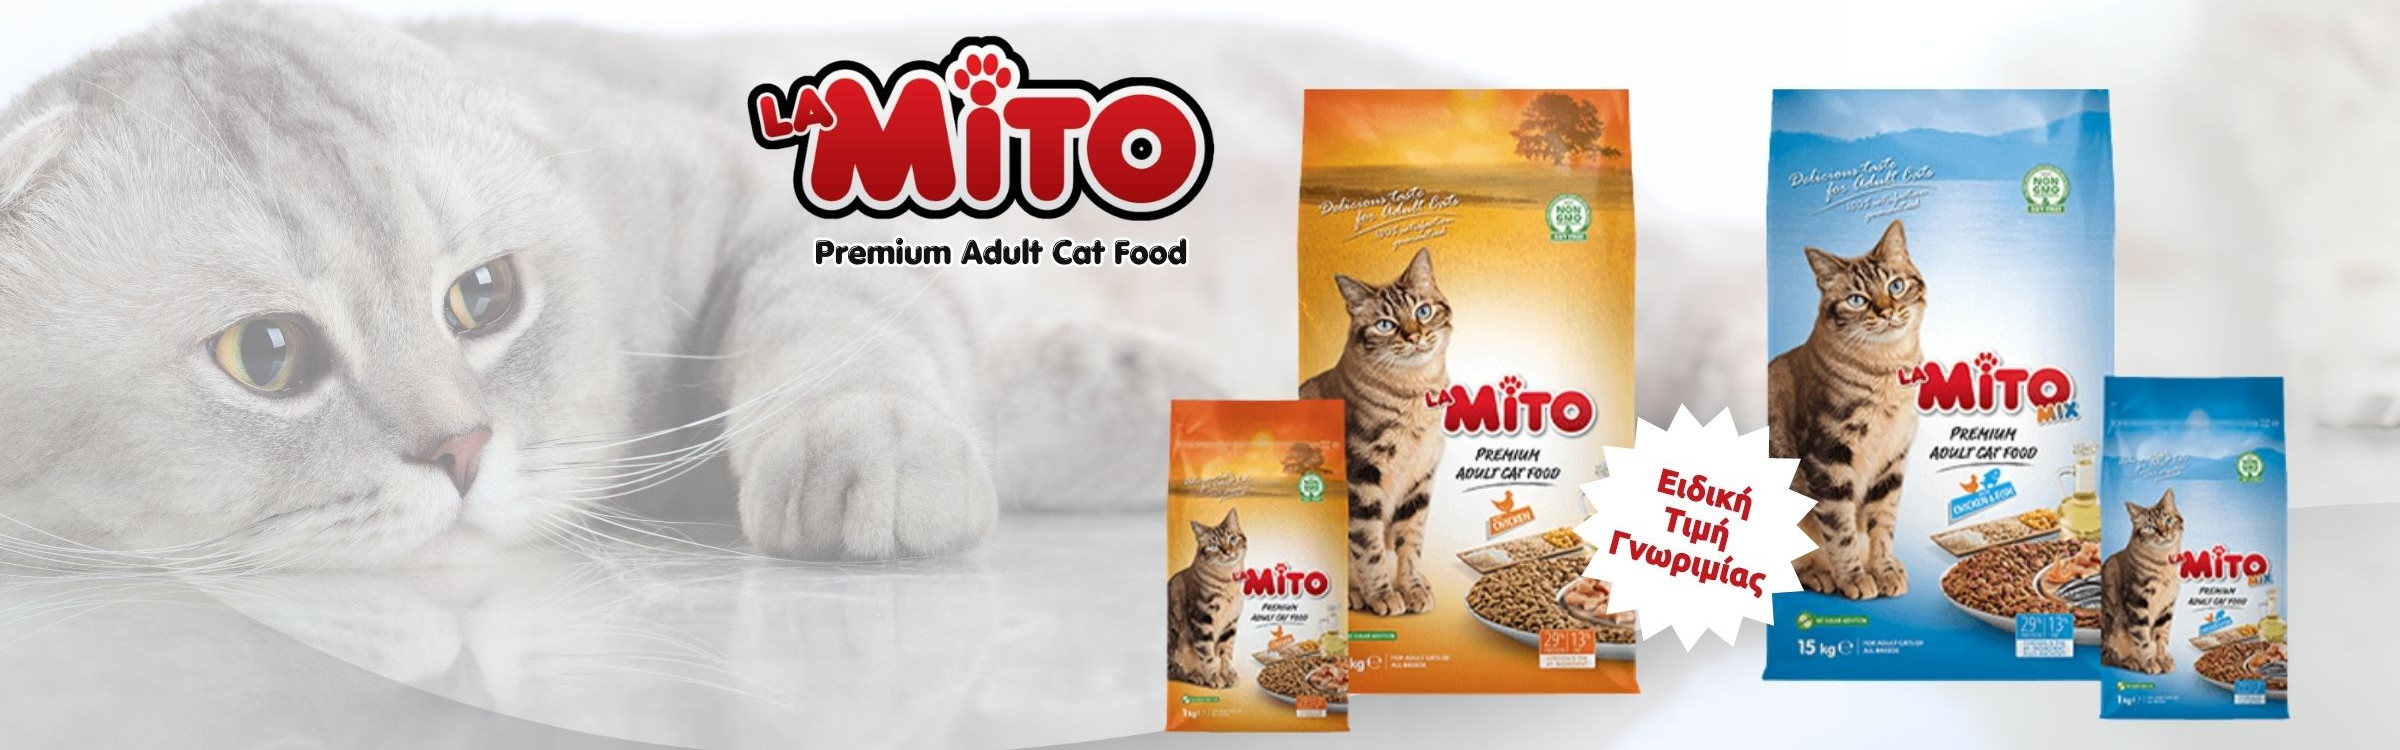 La Mito Dry Cat Food